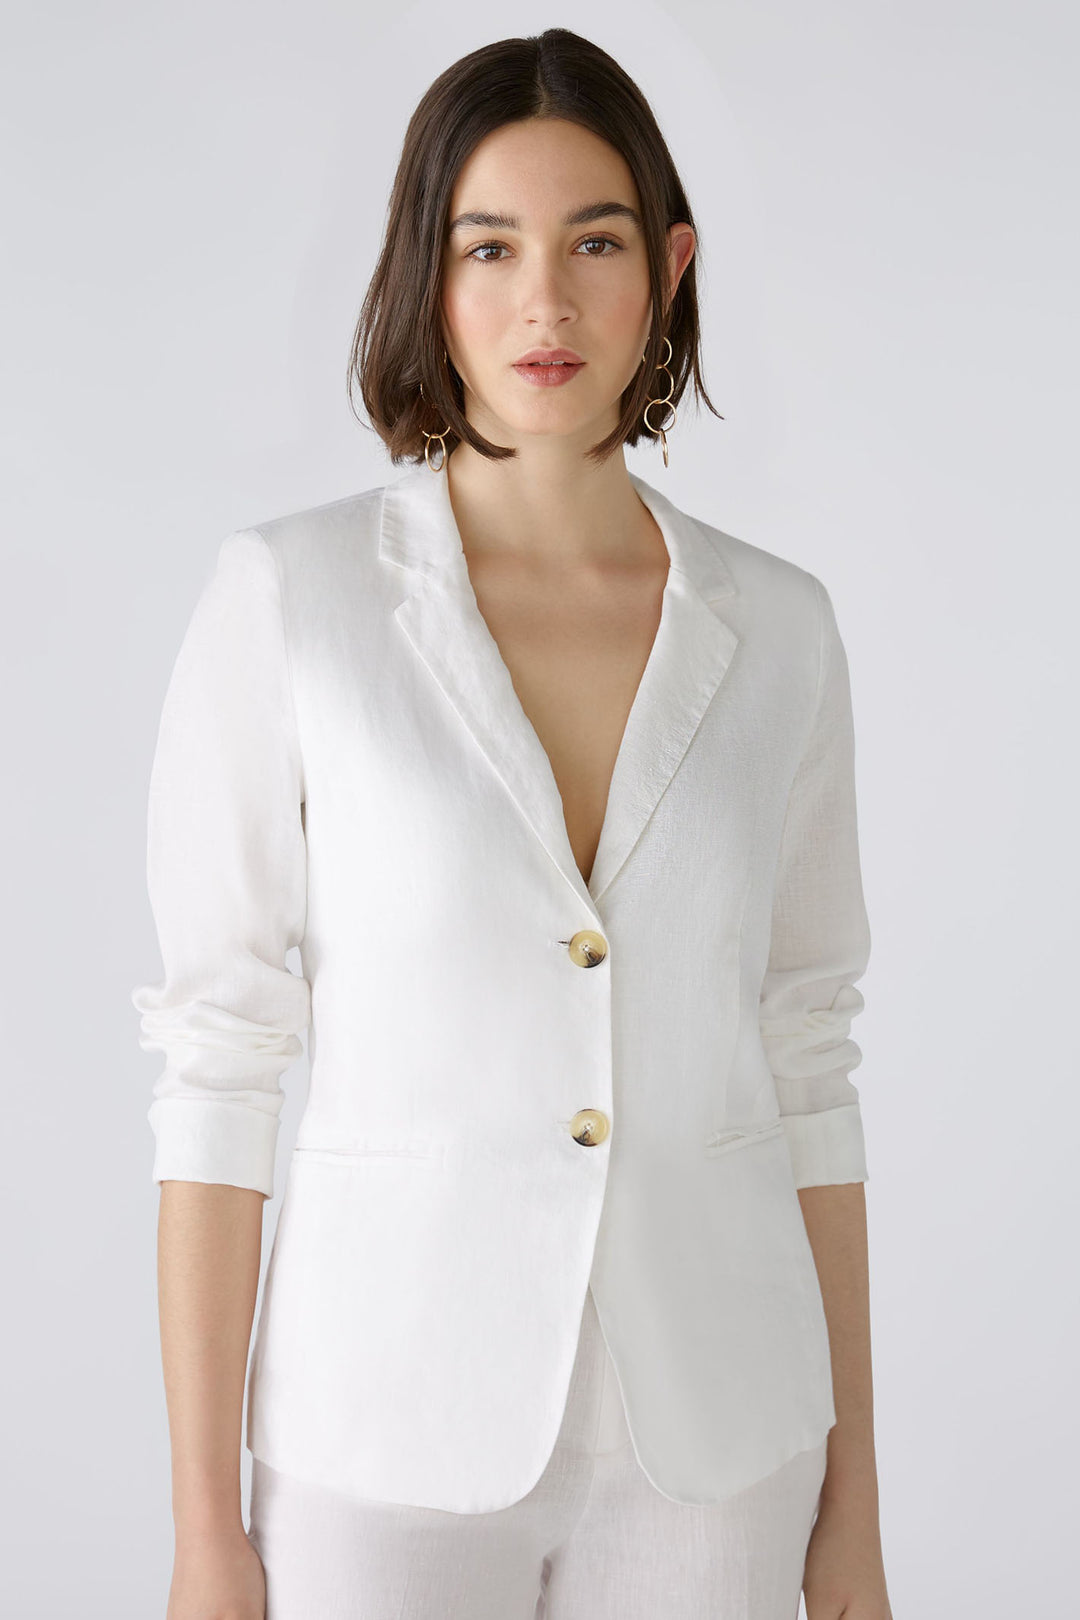 Oui 87417 Optic White Two Button Linen Jacket - Olivia Grace Fashion